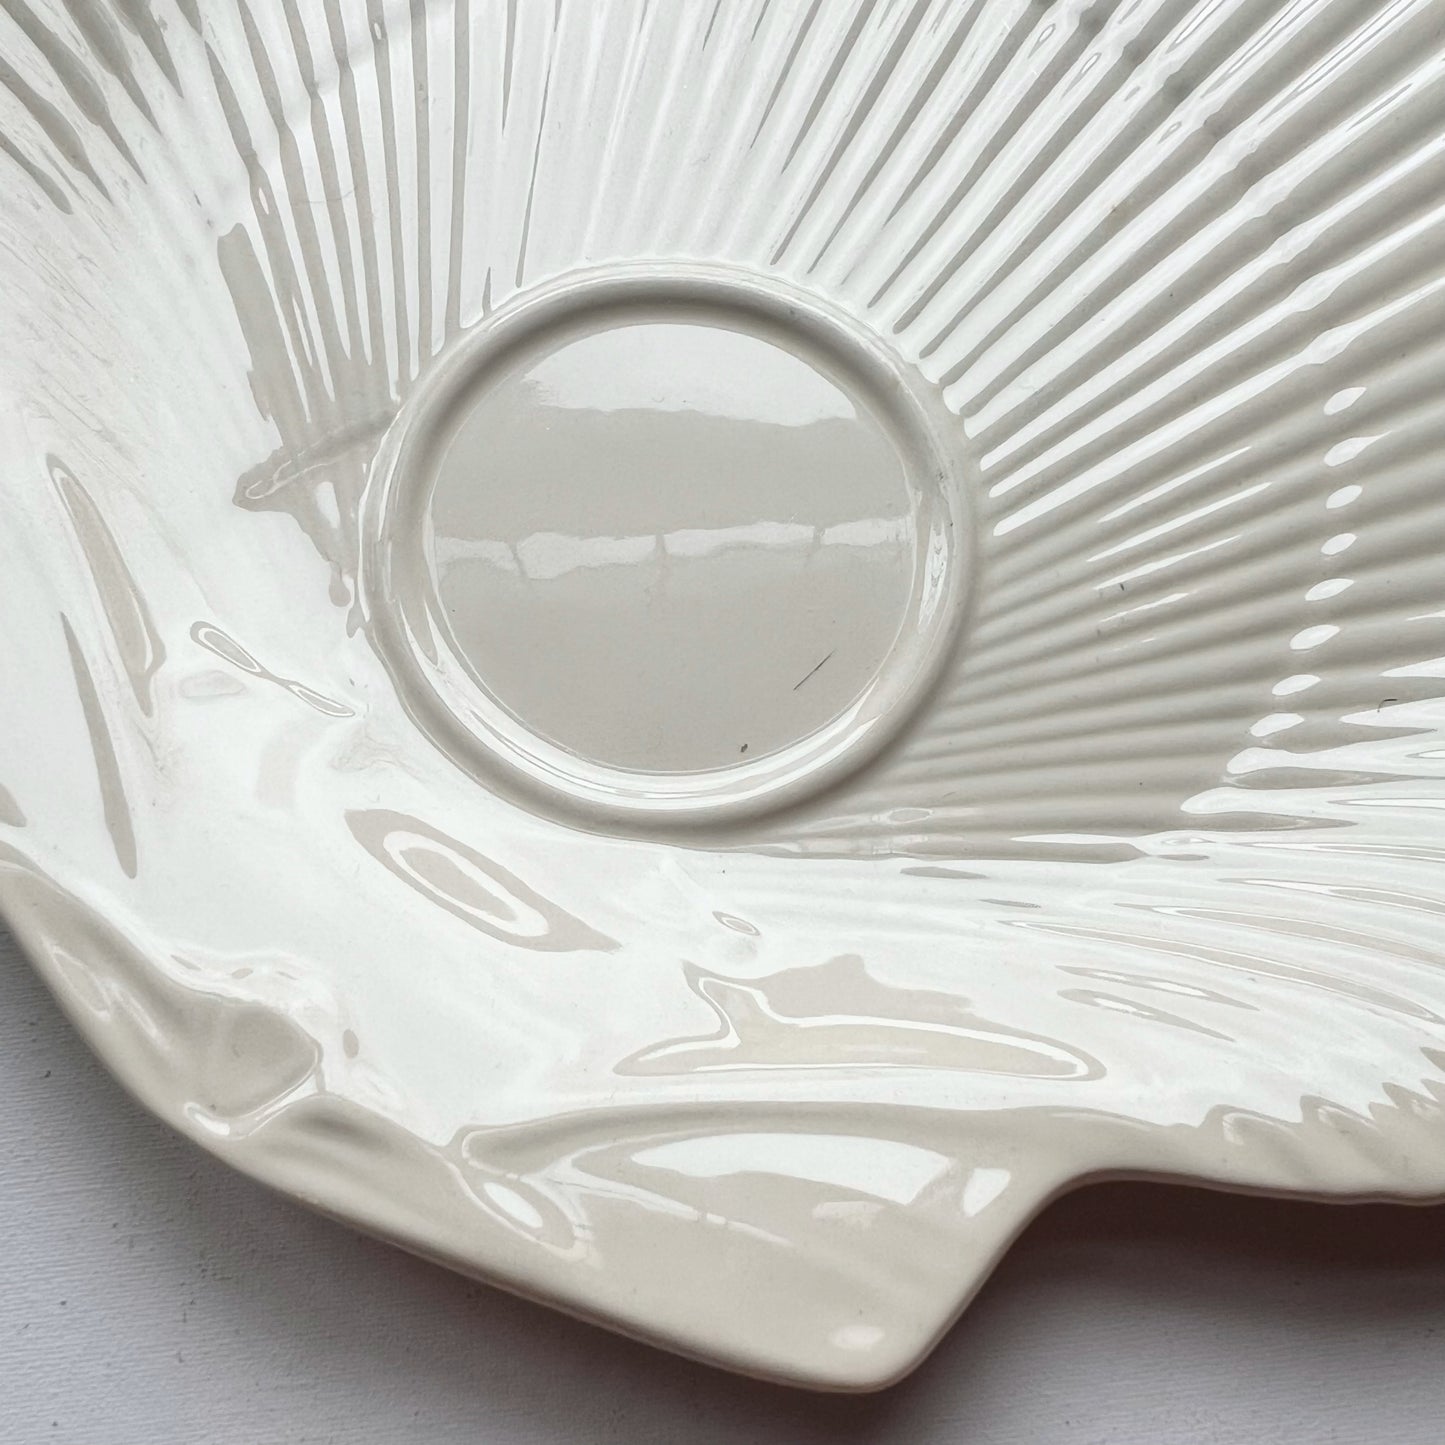 【Vintage】UK - 1960s Wedgwood Shell Plate